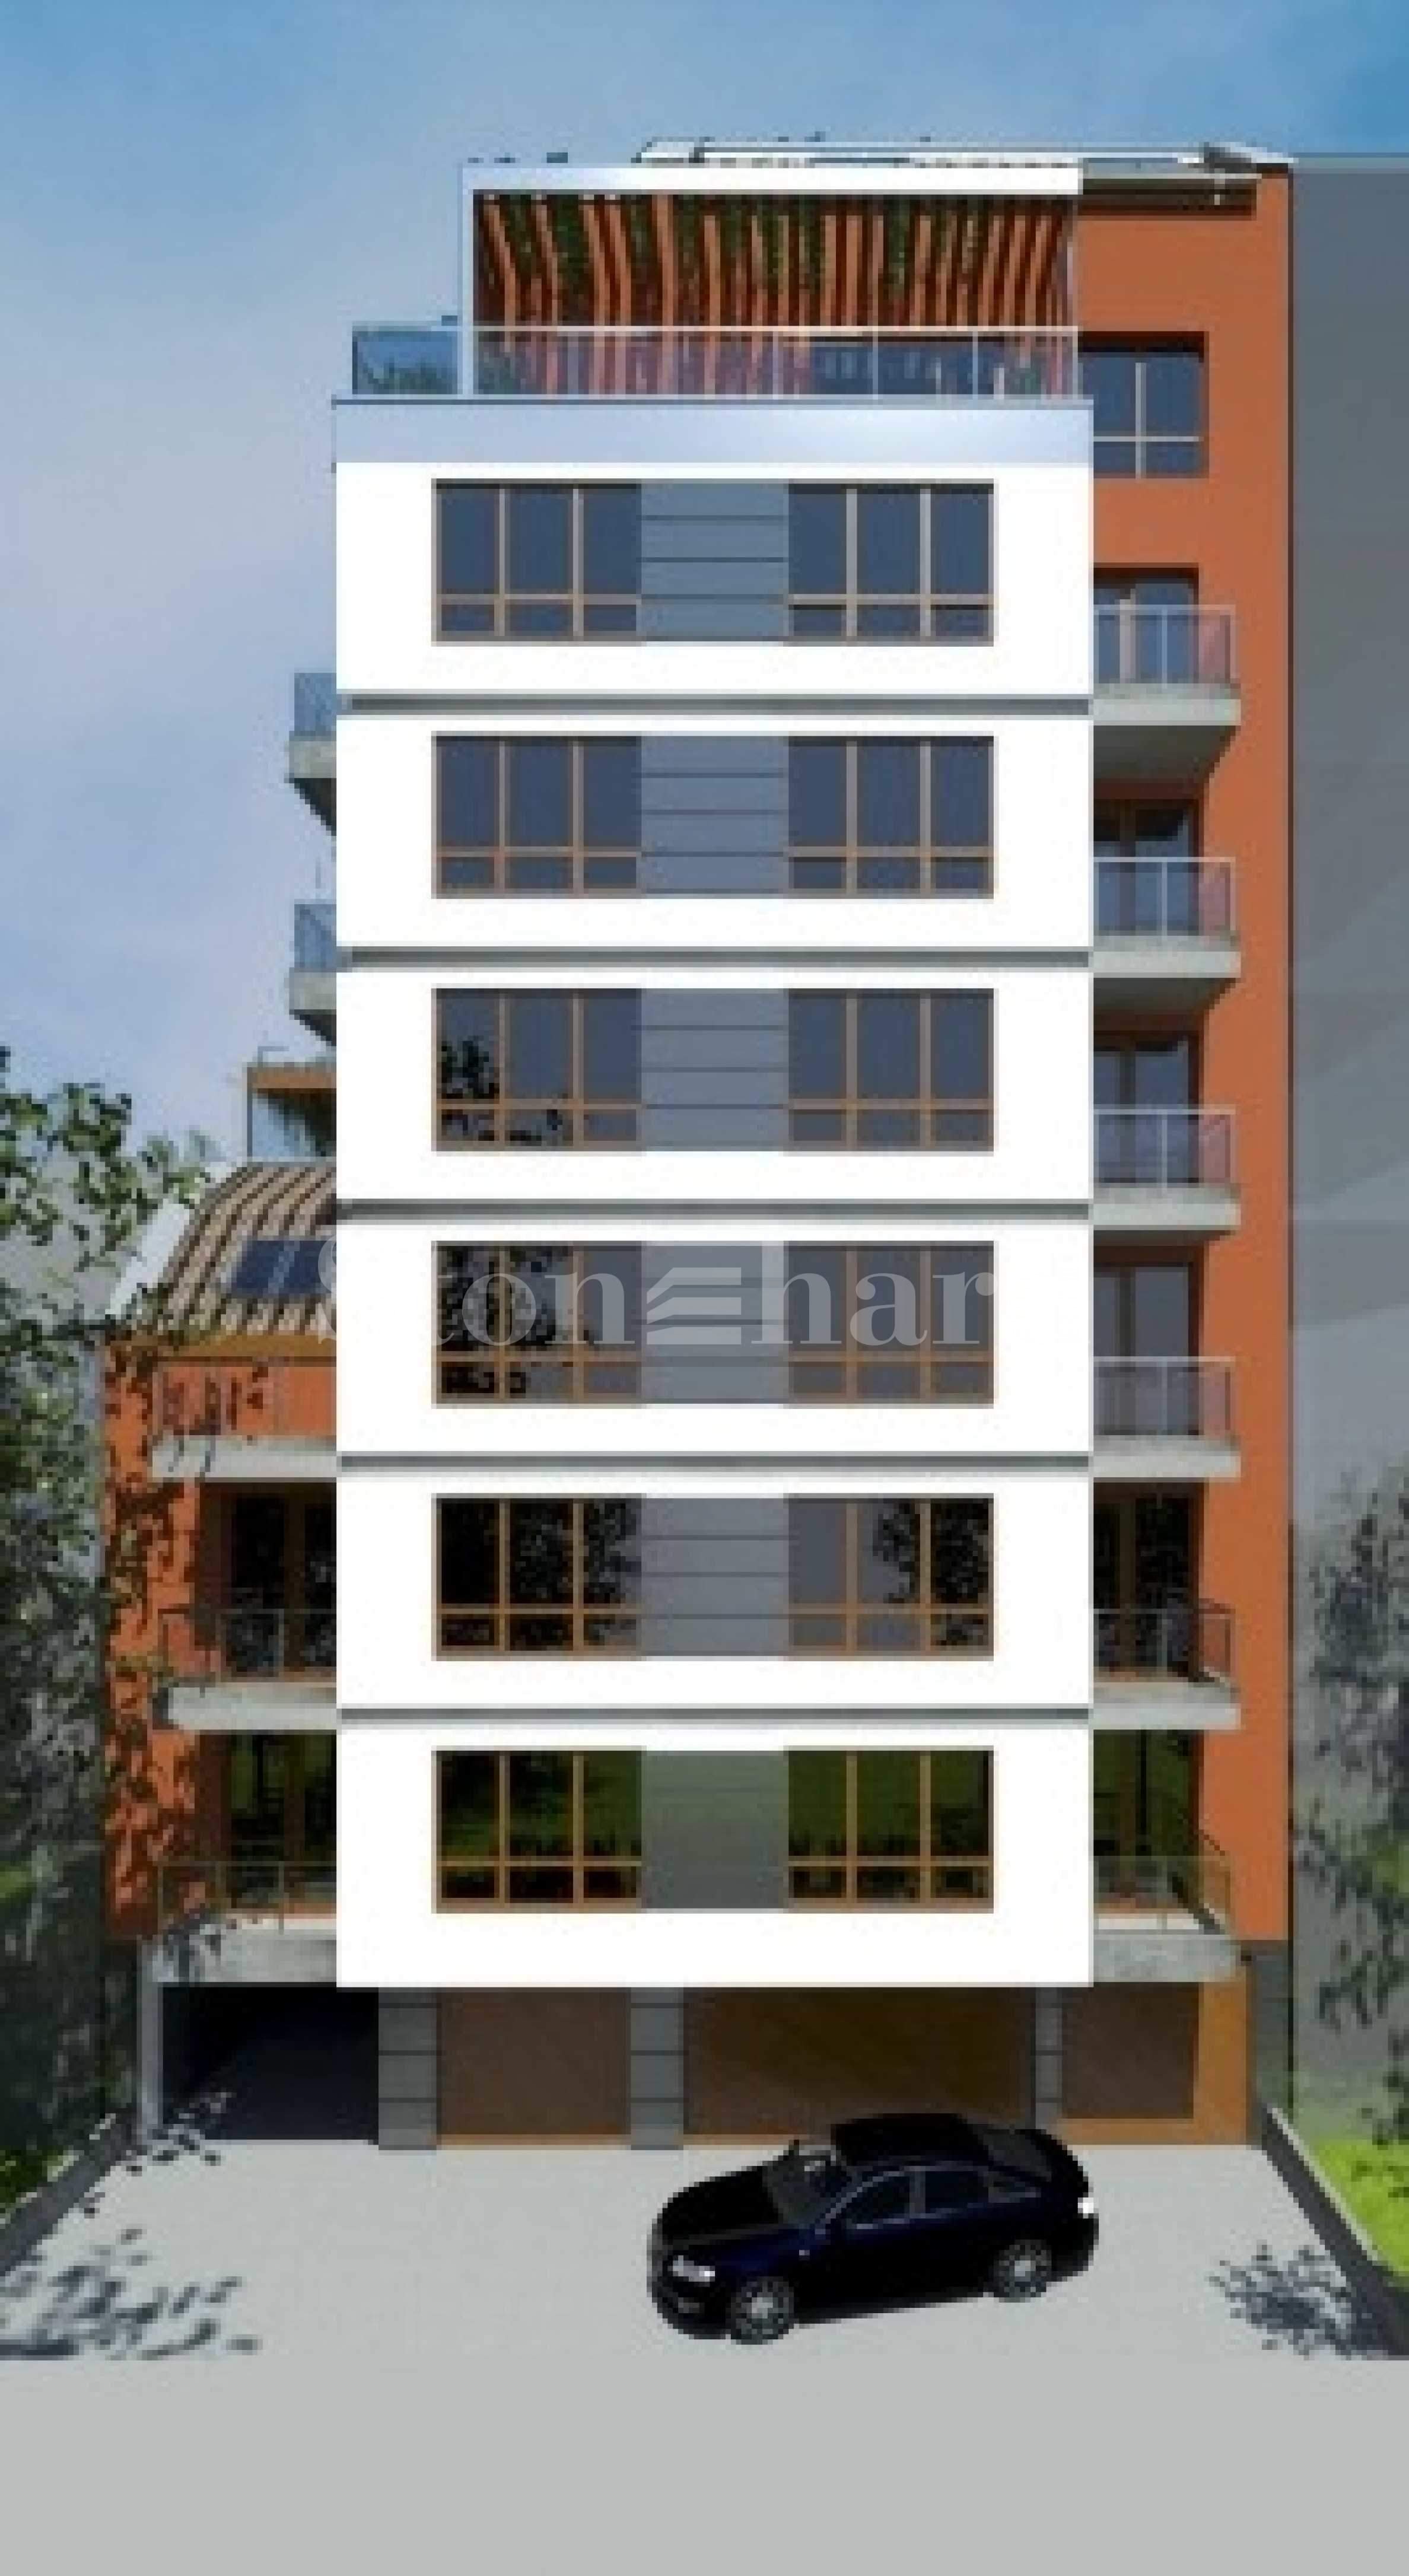 Residential development with top location near Sofia Mall & metro station2 - Stonehard